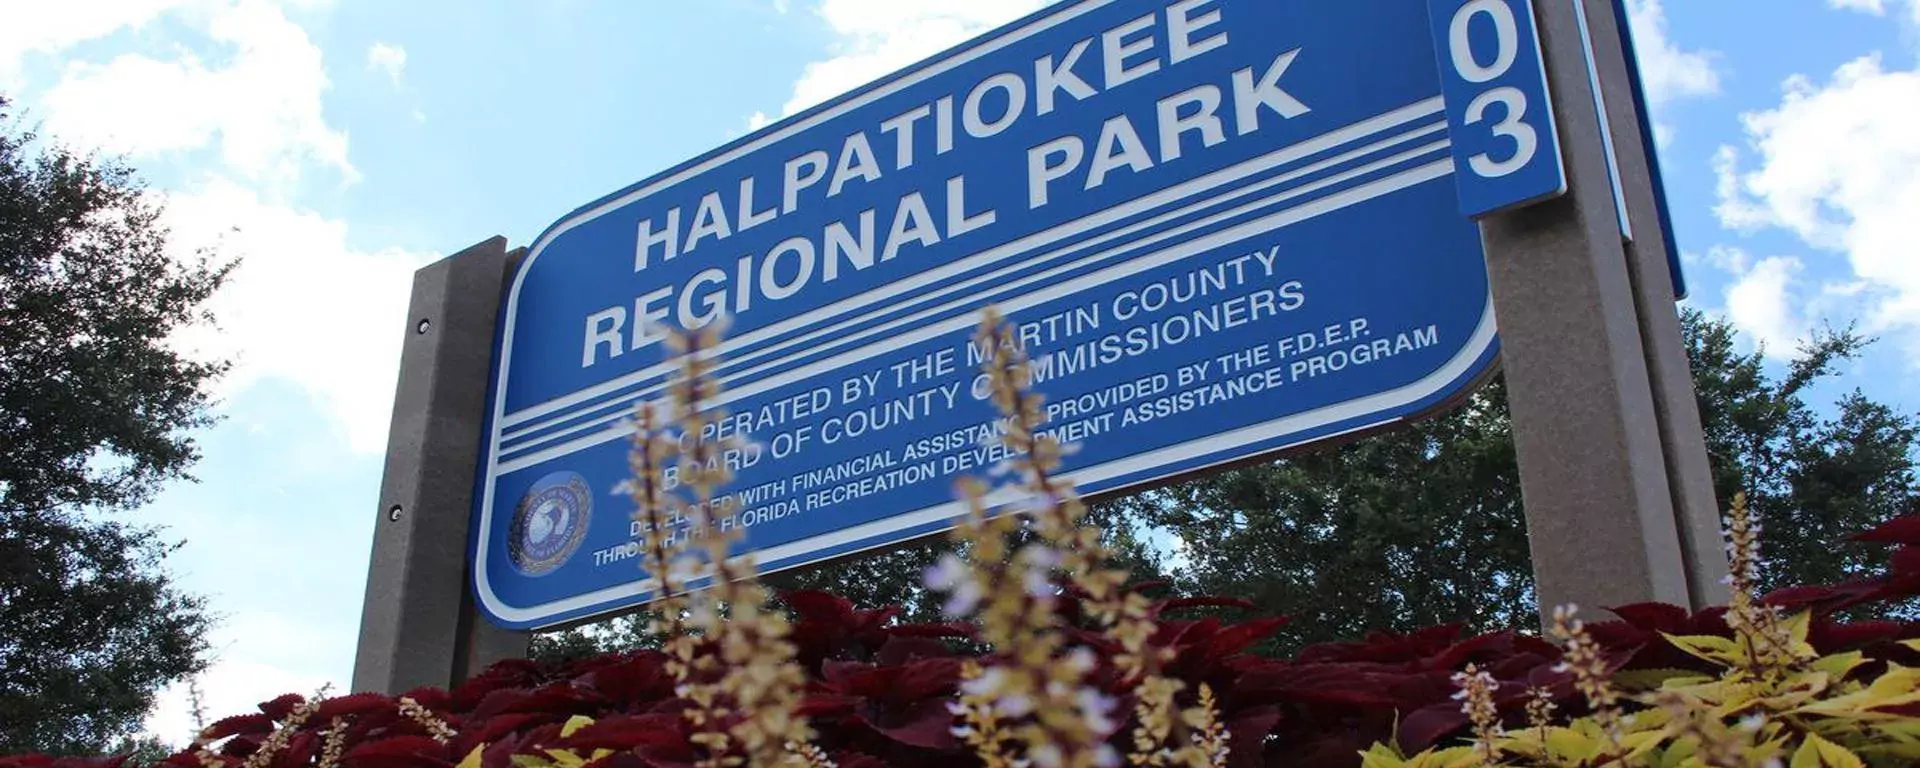 An image of Halpatiokee Park